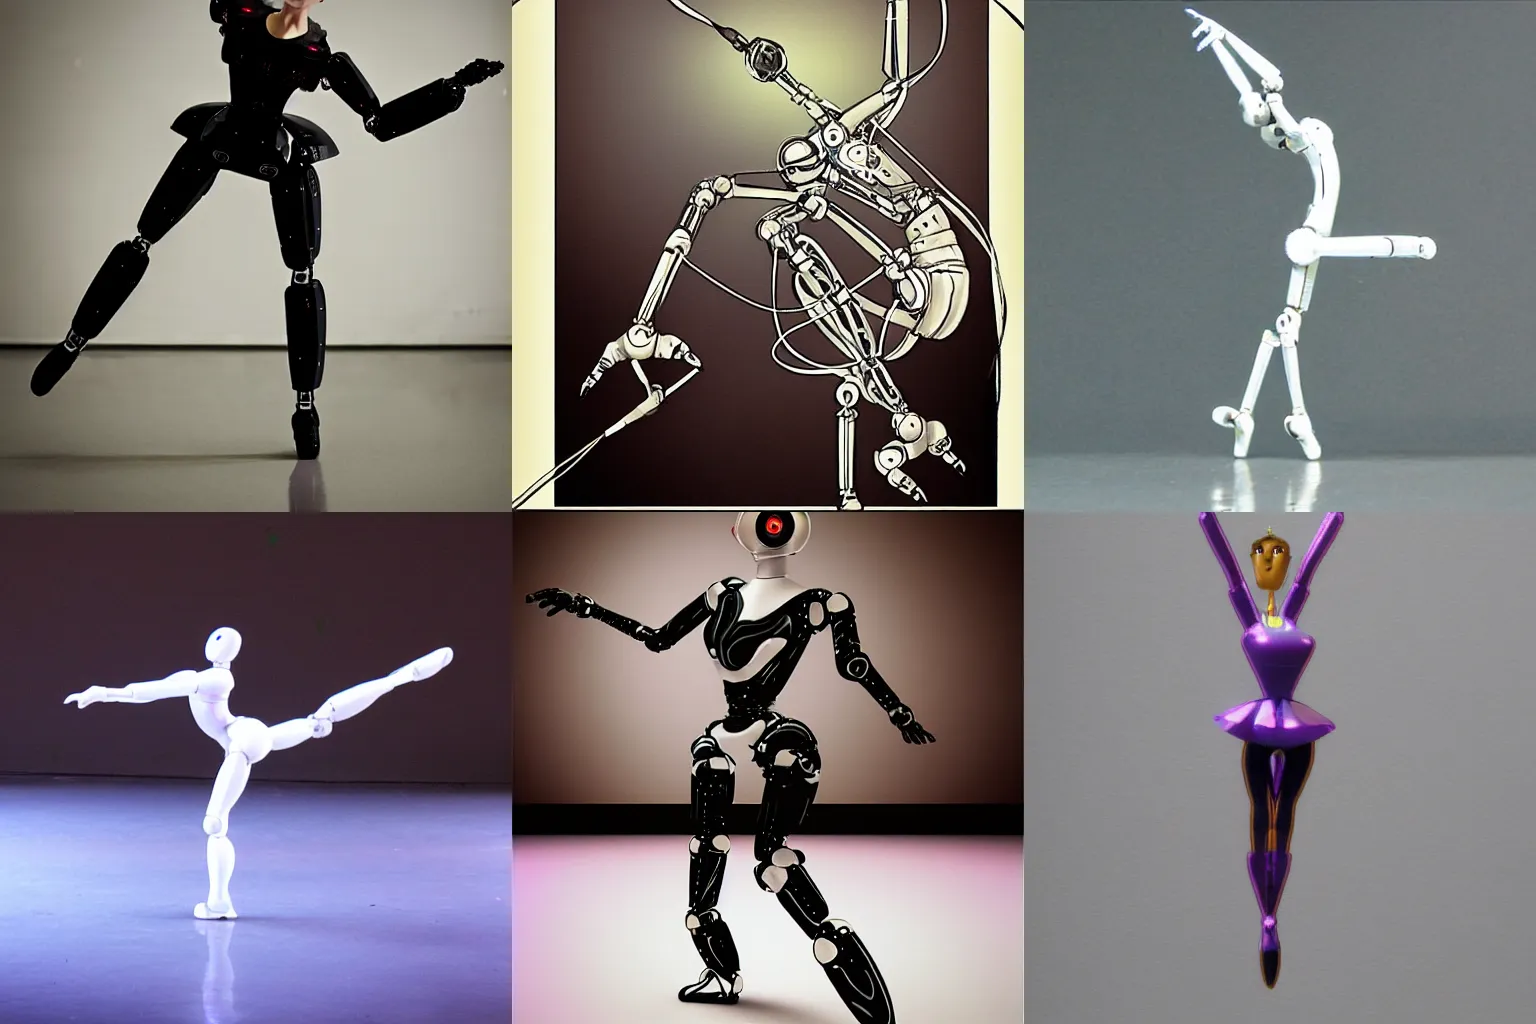 Prompt: robotic ballet dancer, scifi